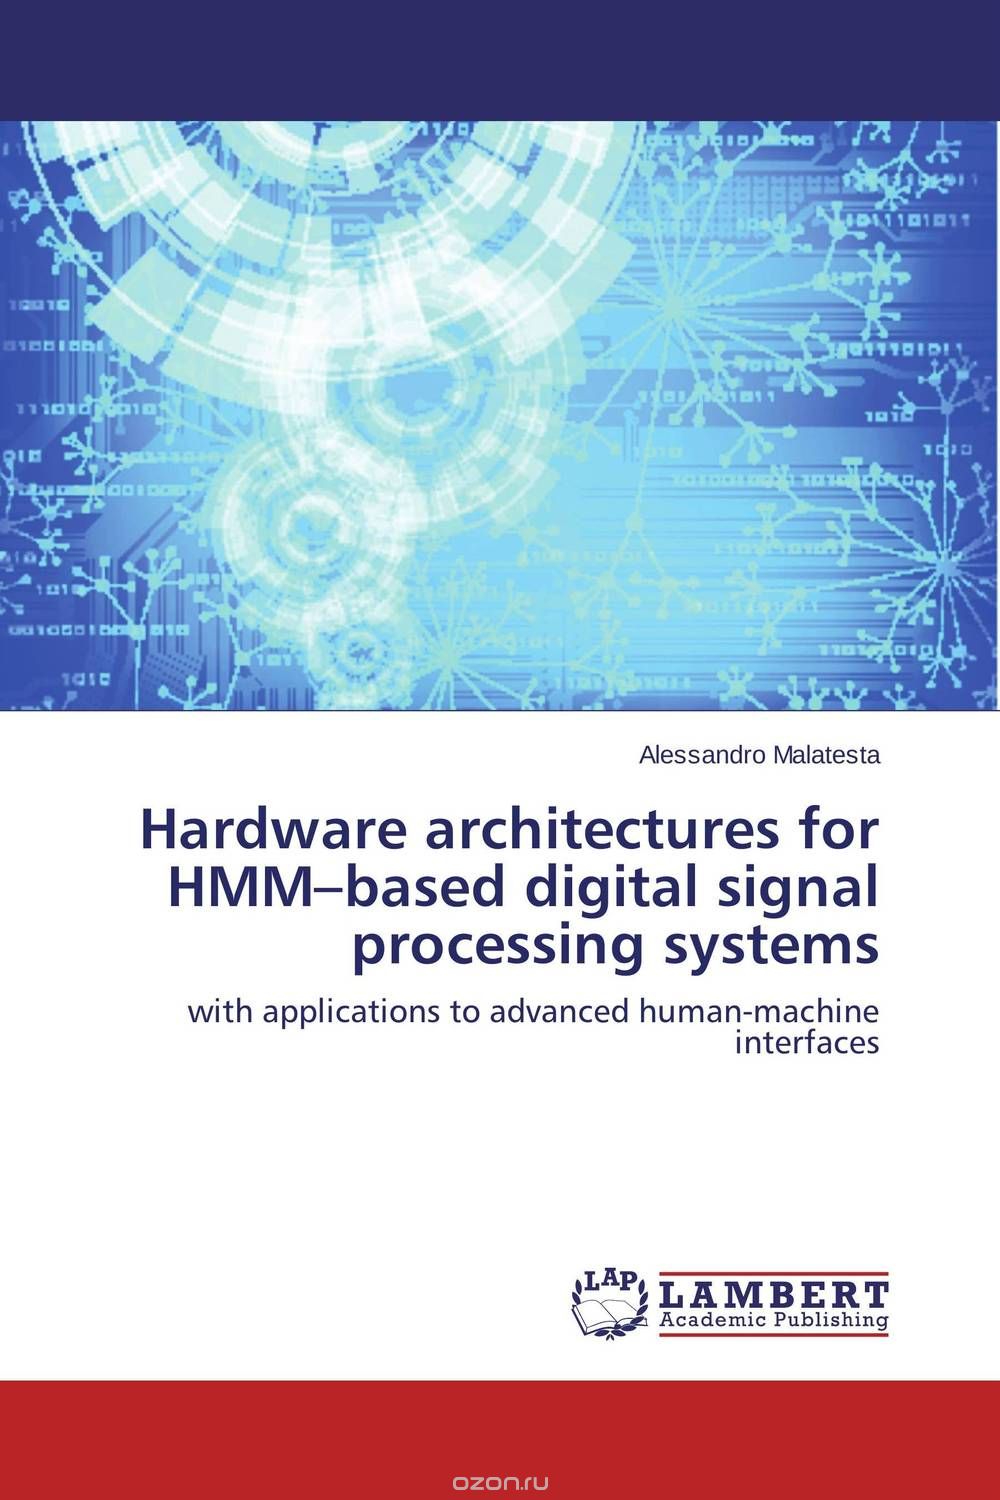 Скачать книгу "Hardware architectures for HMM–based digital signal processing systems"